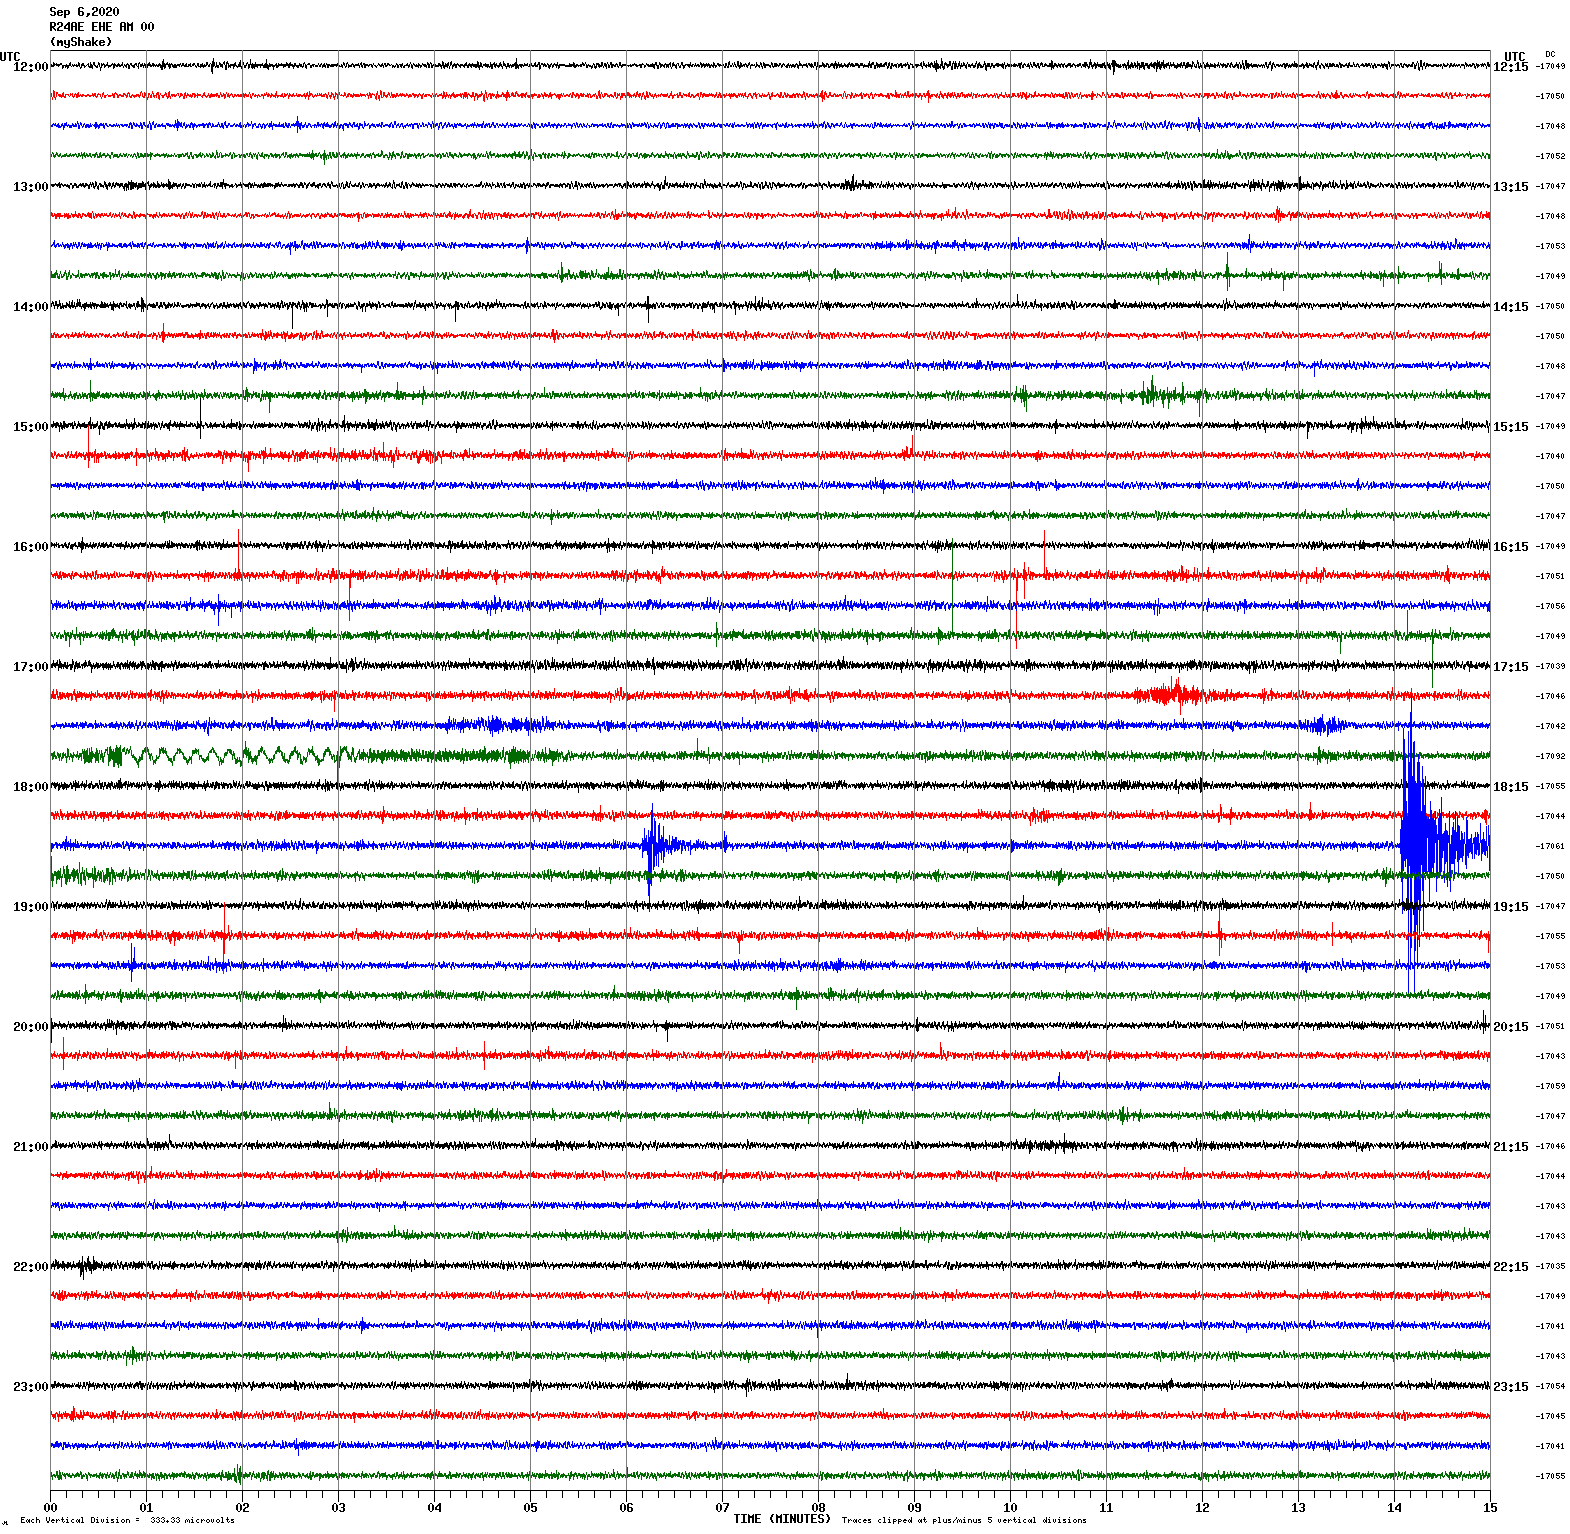 /seismic-data/R24AE/R24AE_EHE_AM_00.2020090612.gif